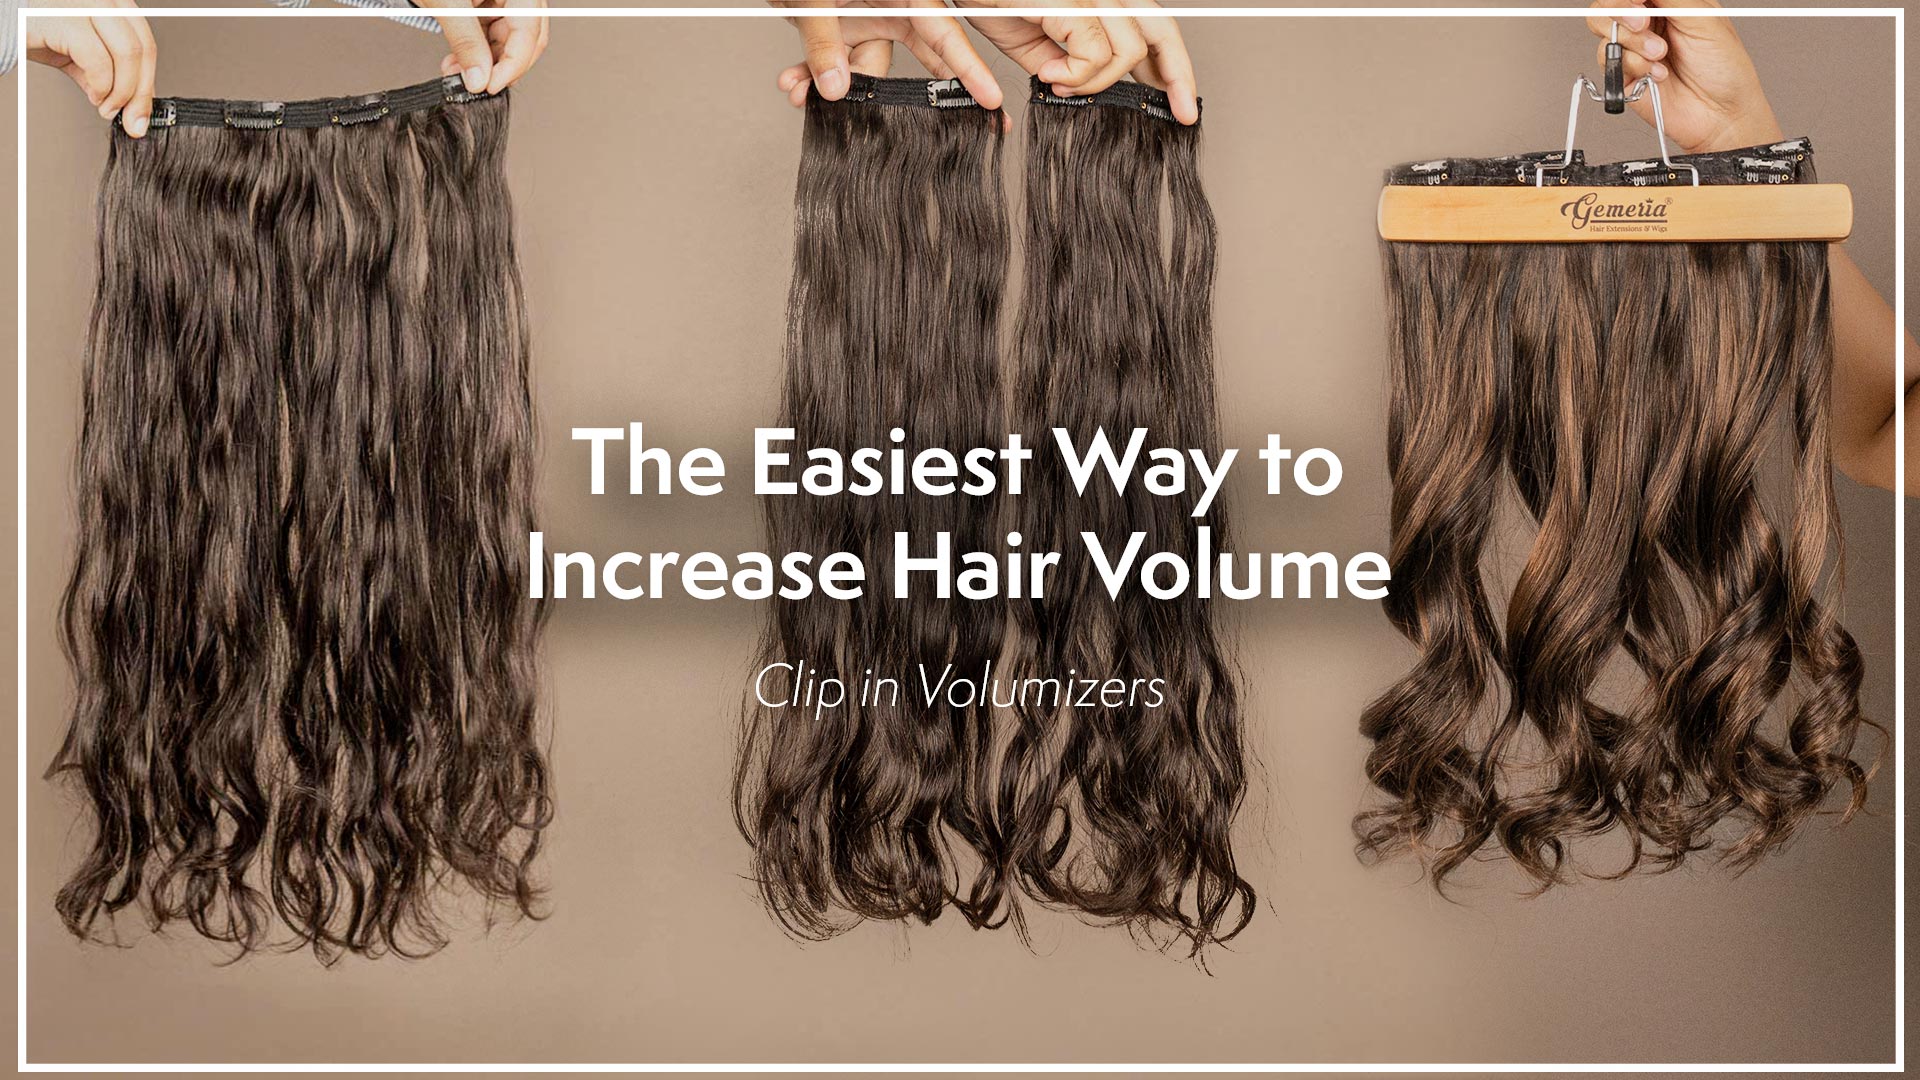 The easiest way to increase hair volume